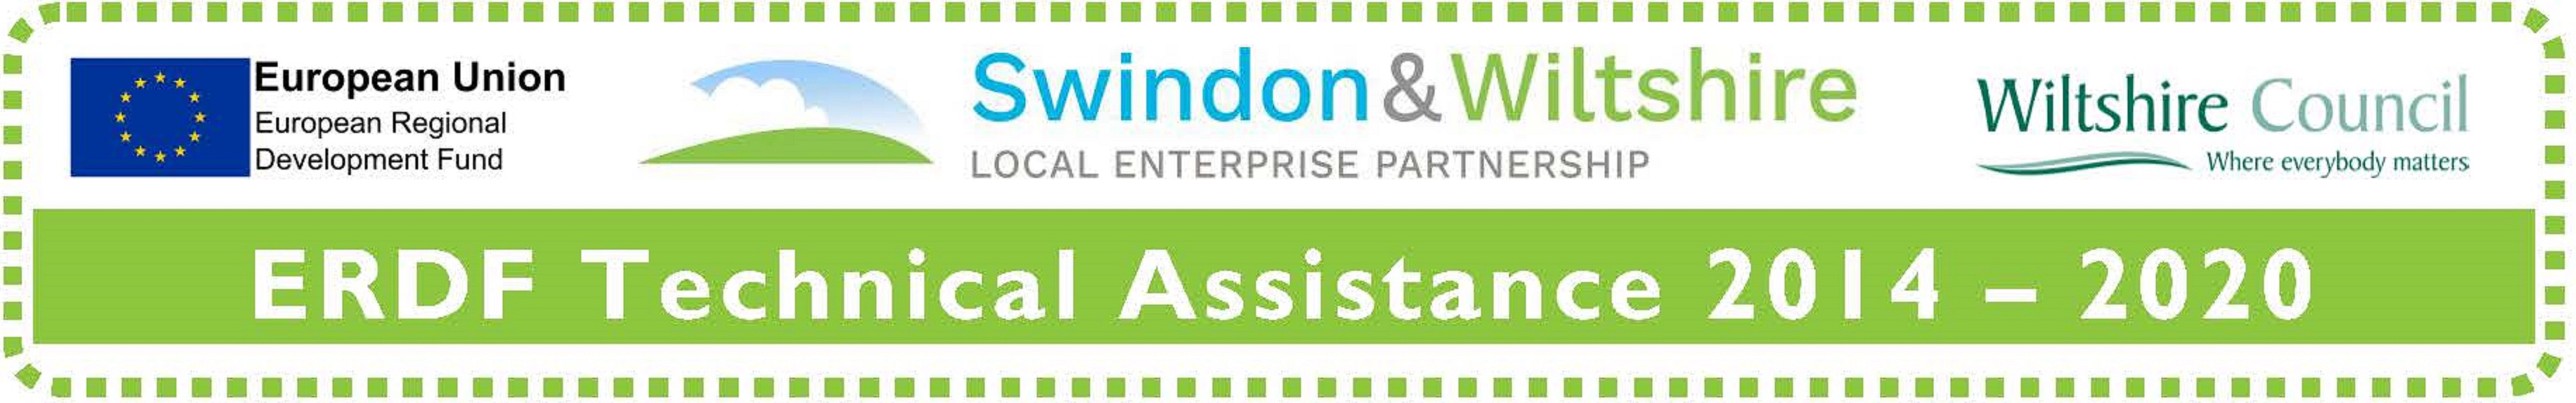 Swindon & Wiltshire ESIF EU-funding programme Logo